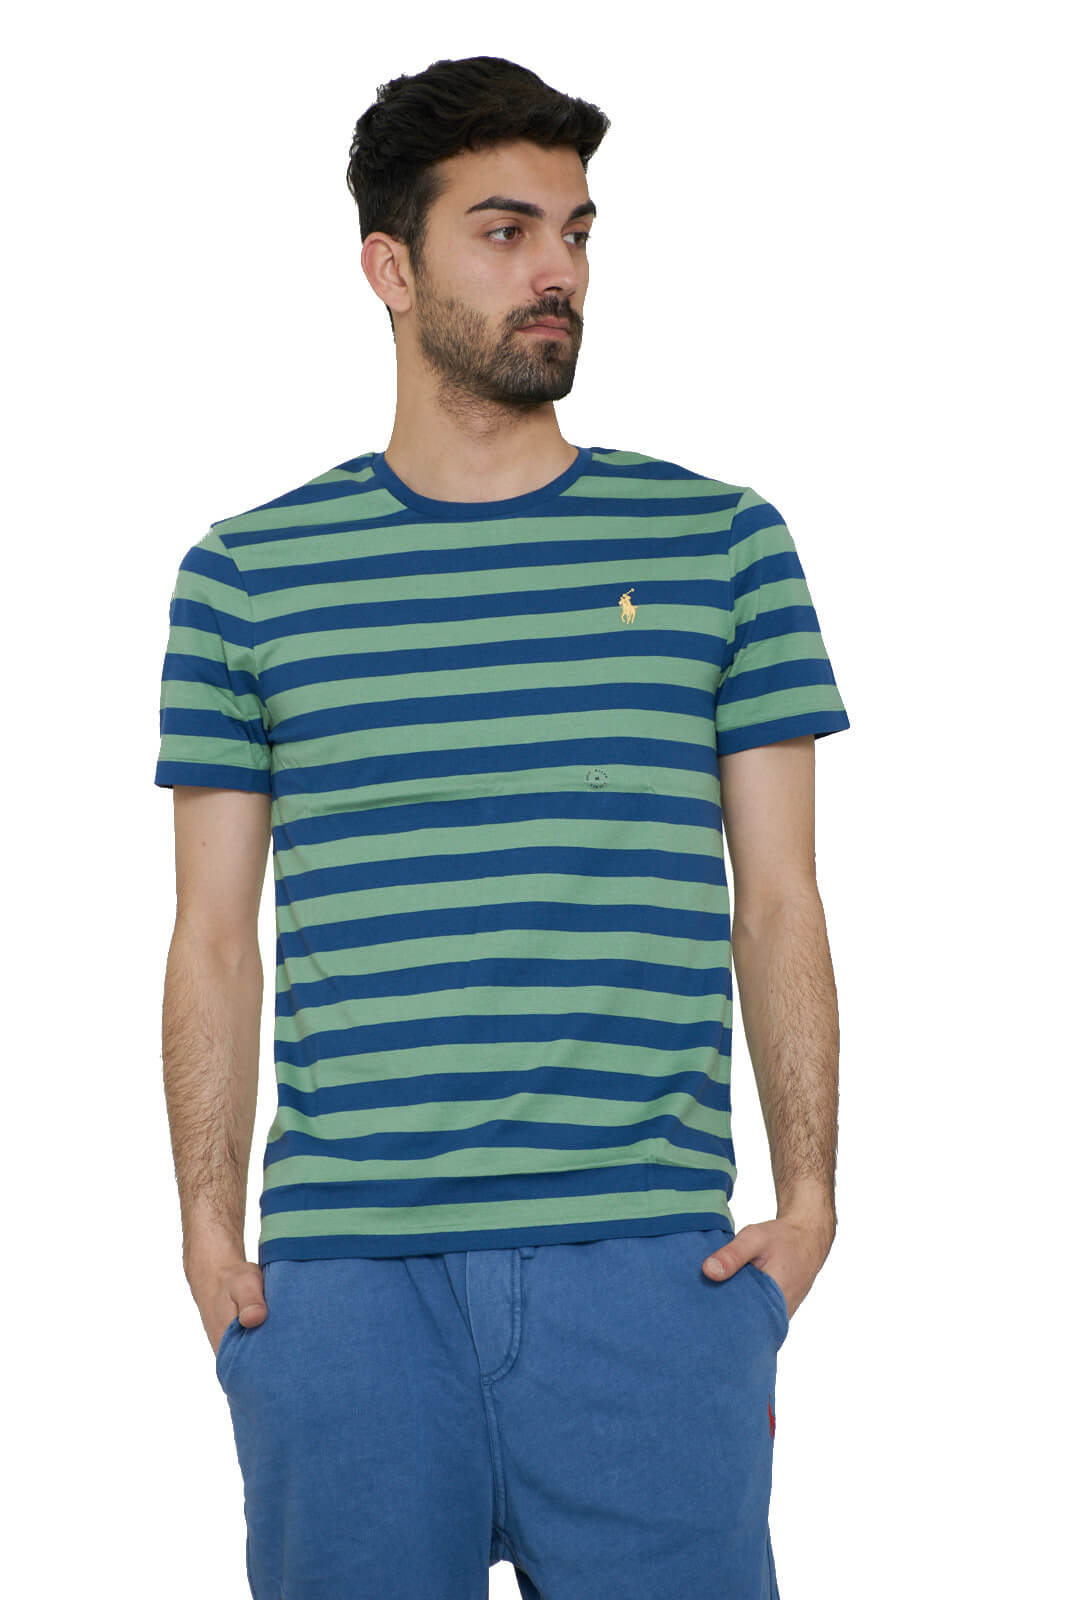 Polo Ralph Lauren Men's striped patterned t shirt